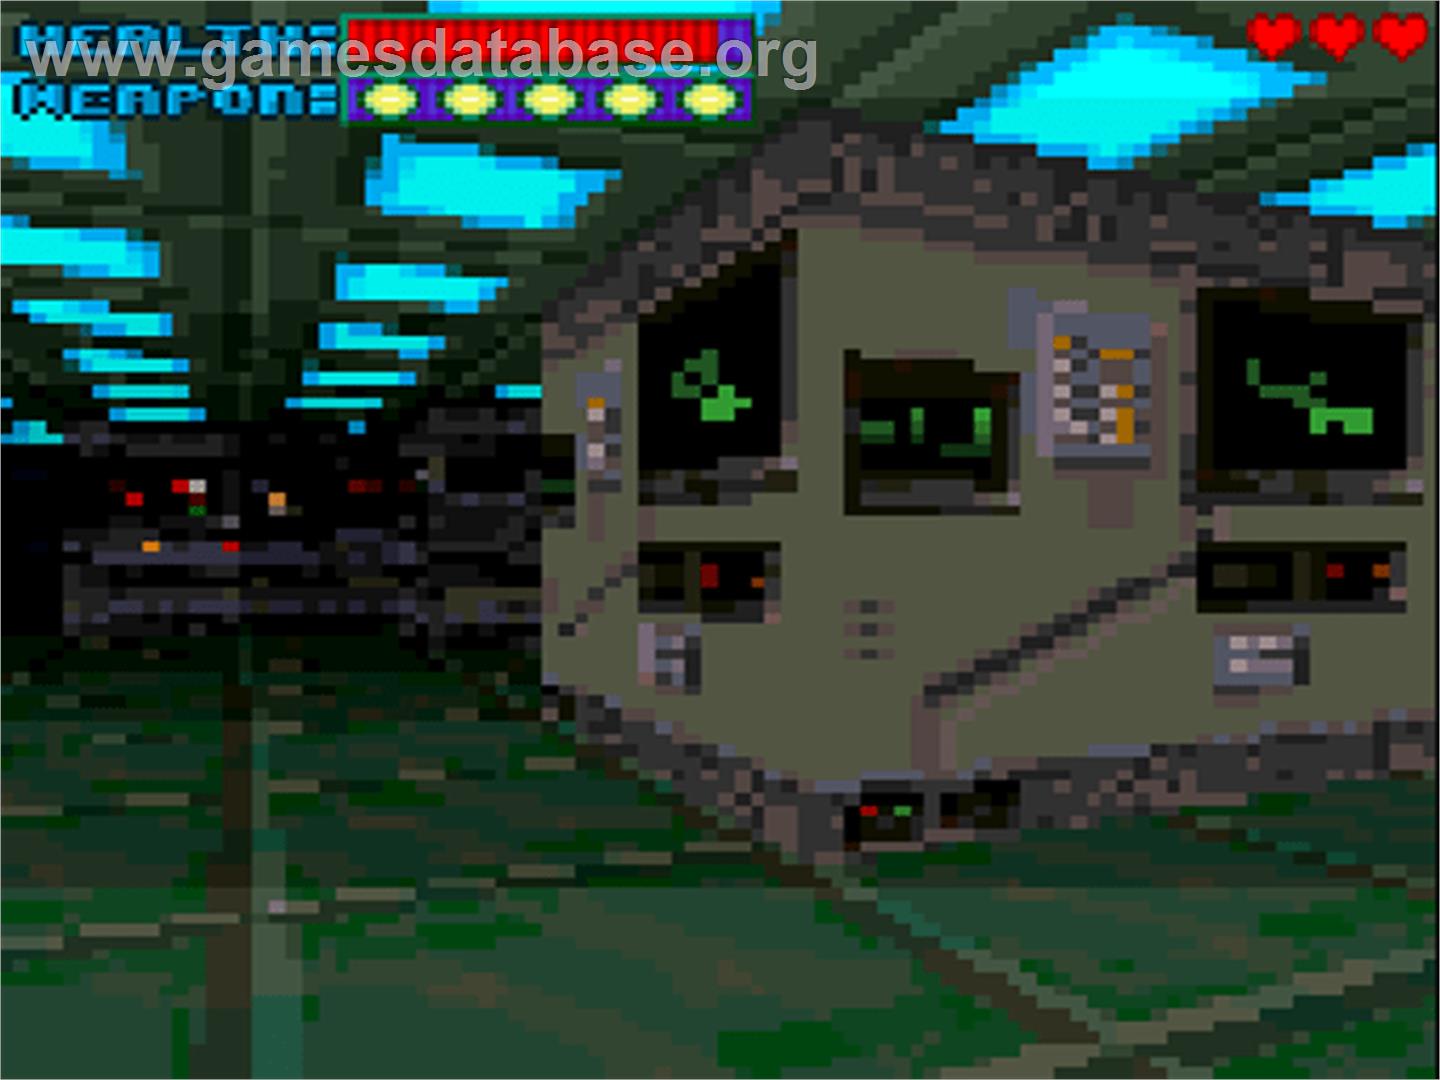 Gloom - Commodore Amiga CD32 - Artwork - In Game